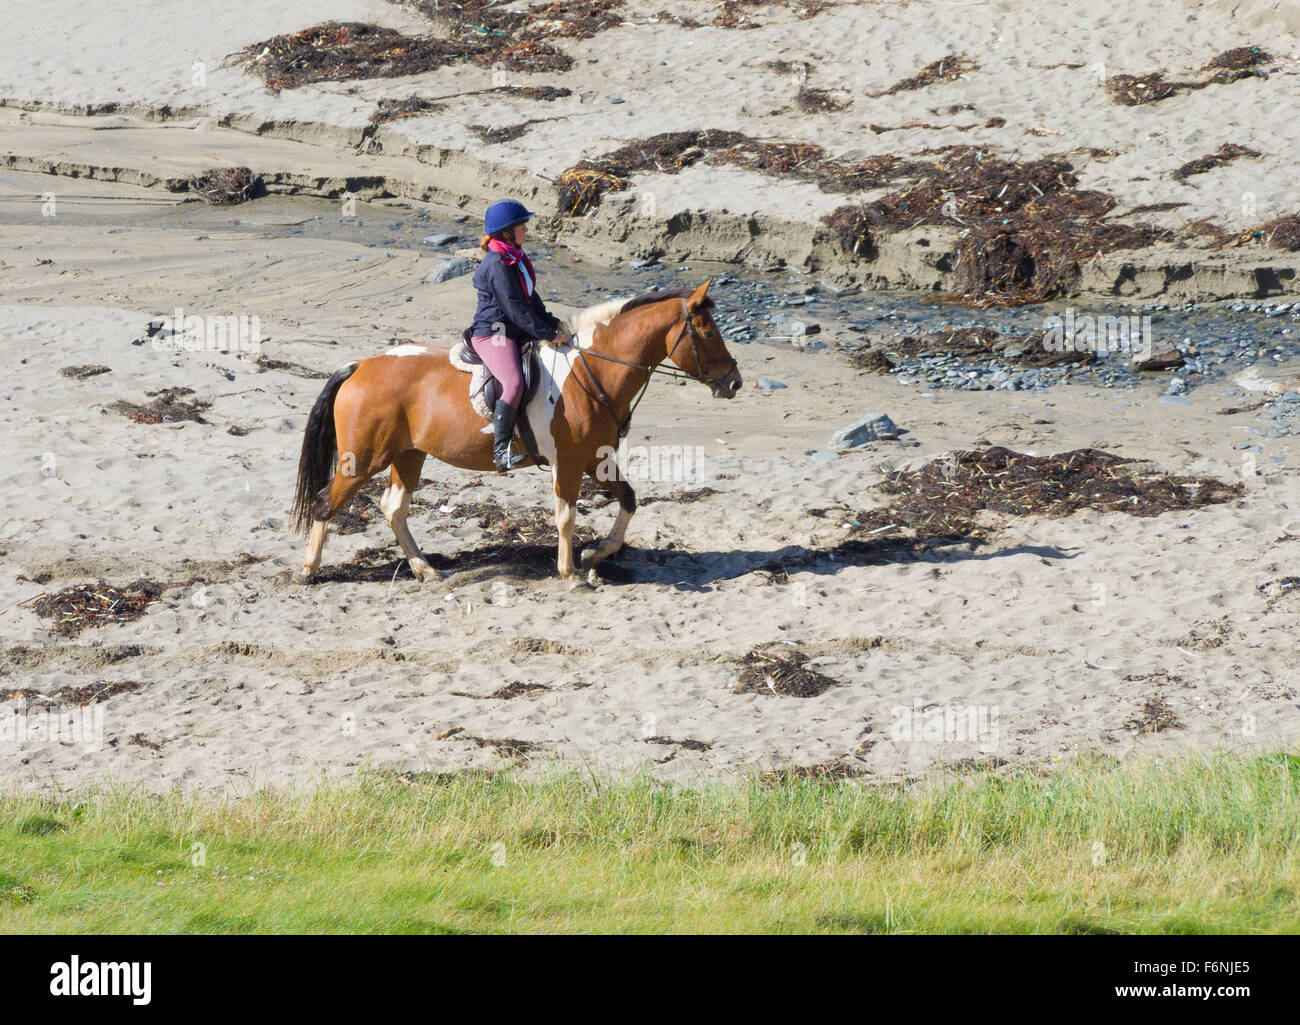 Woman Riding a Horse on a Sandy Beach, UK Stock Photo